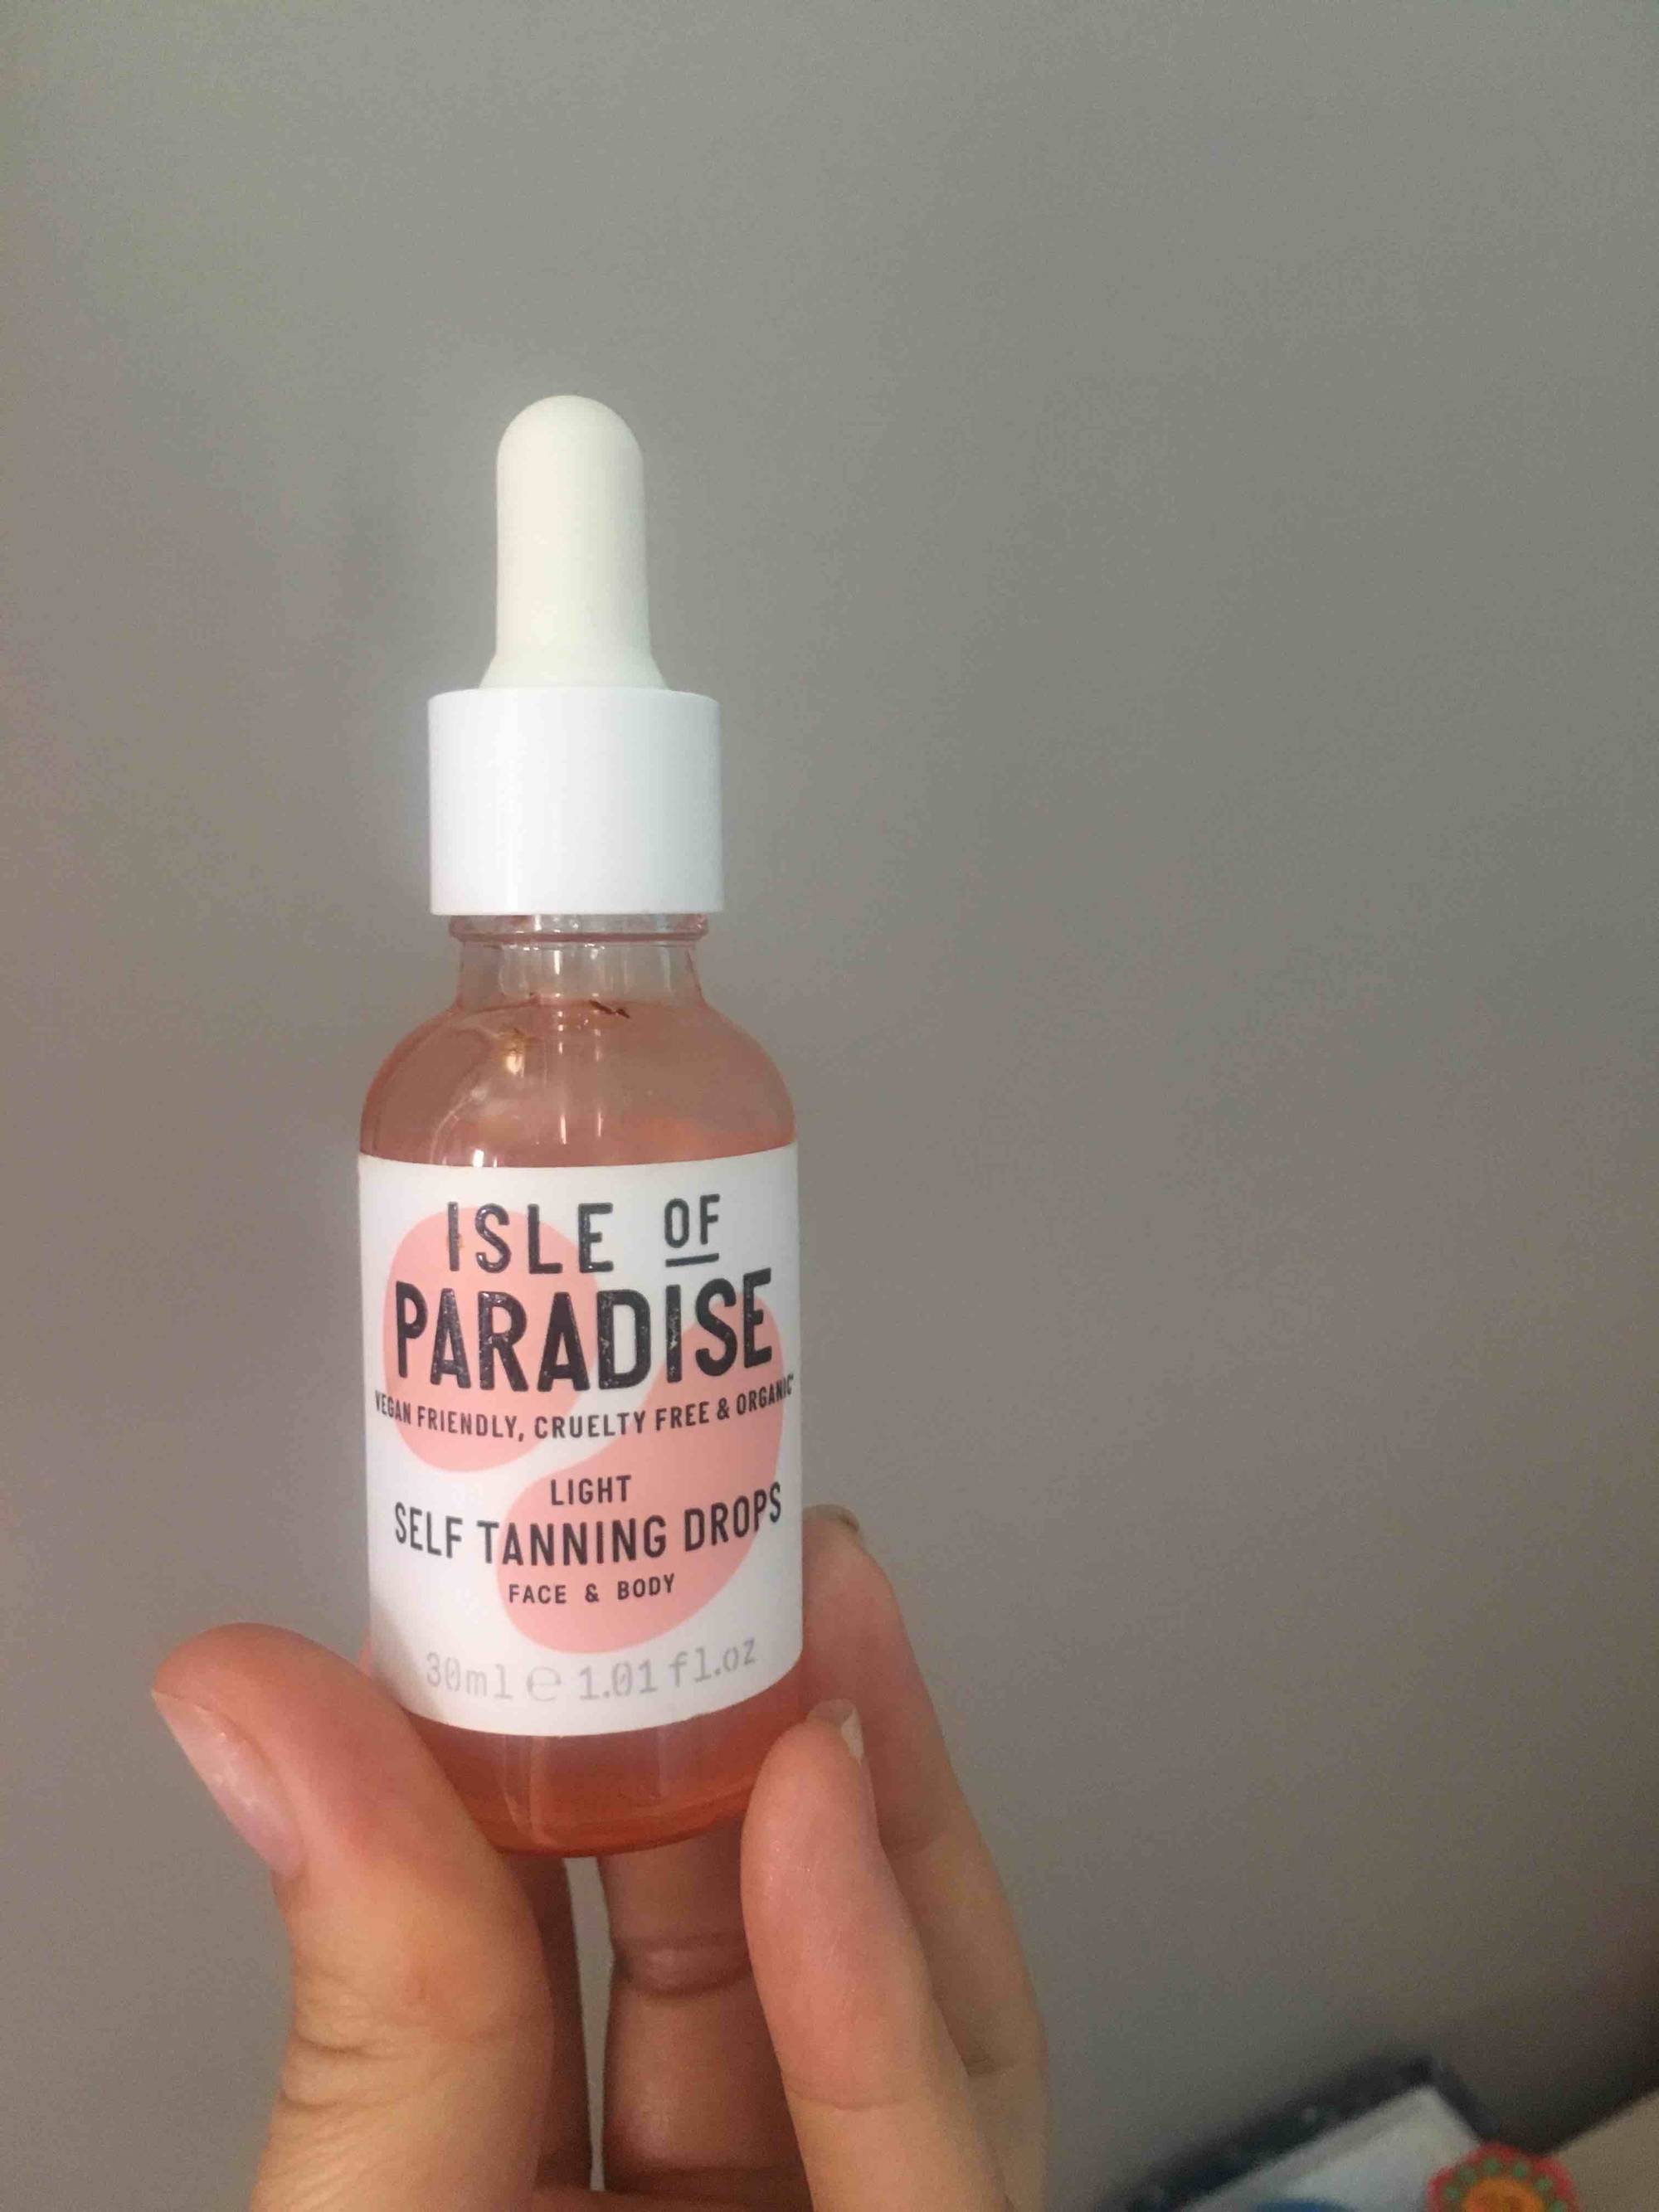 ISLE OF PARADISE - Light - Self tanning drops 